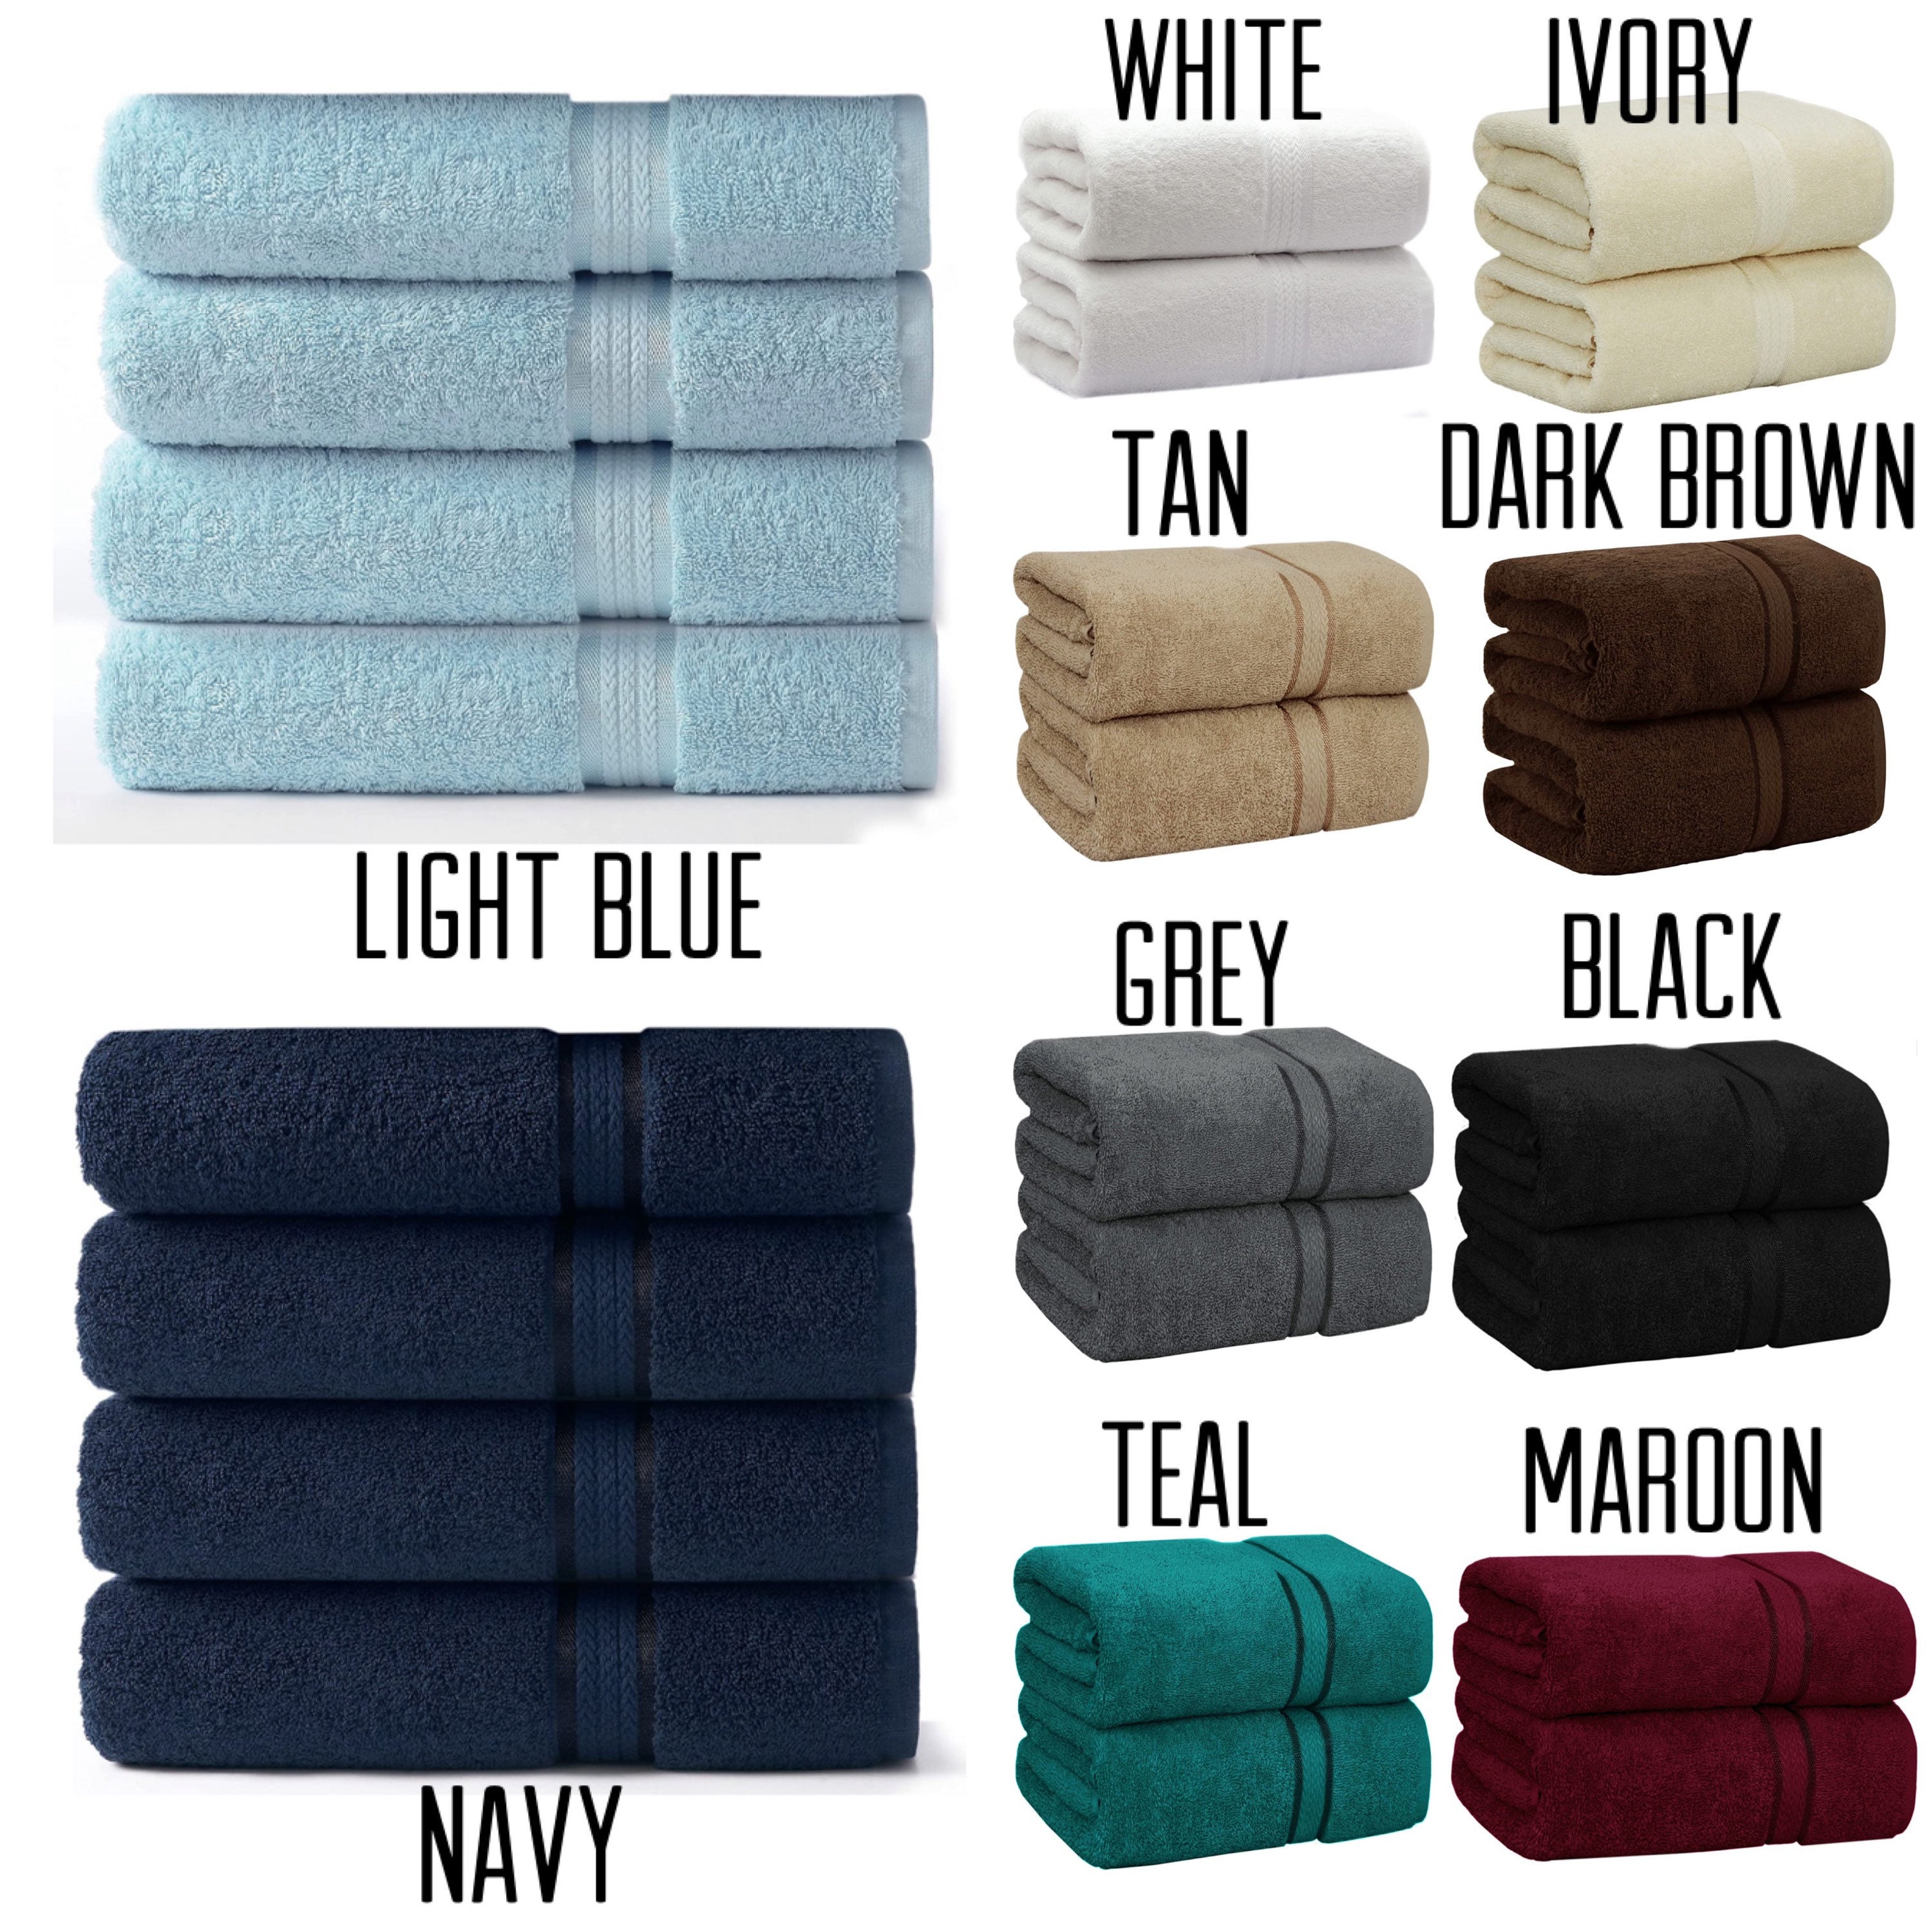 bianco bath towel 60x120 Asciugamano da bagno GraceAier confezione da 4 